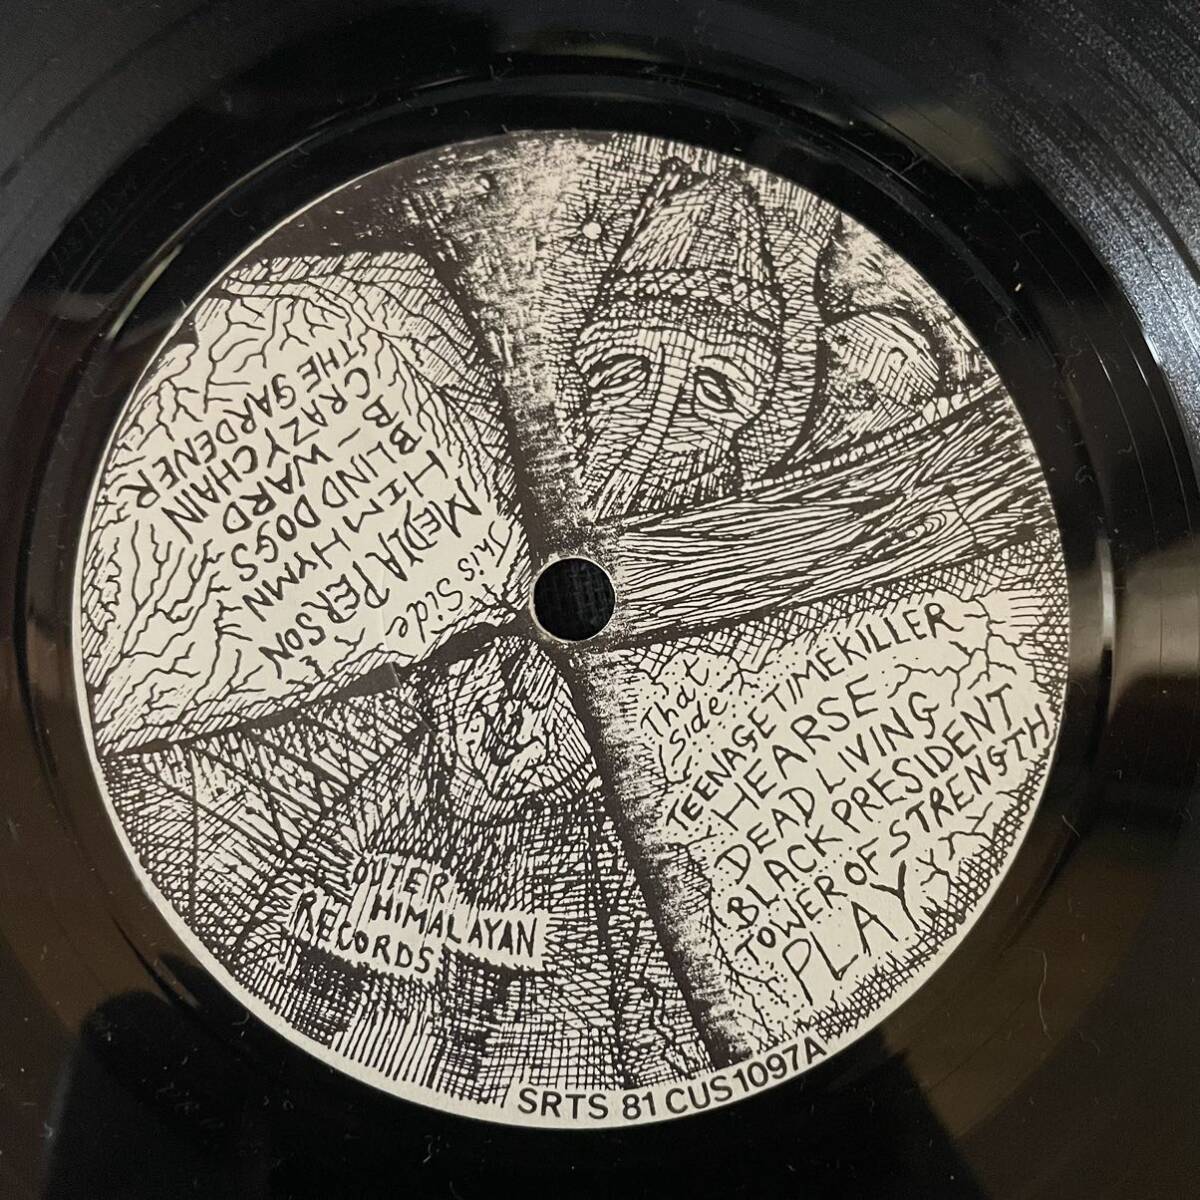 Rudimentary Peni 『Teenage Time Killer EP』 レコード SRTS 81 CUS 1097A パンクの画像4